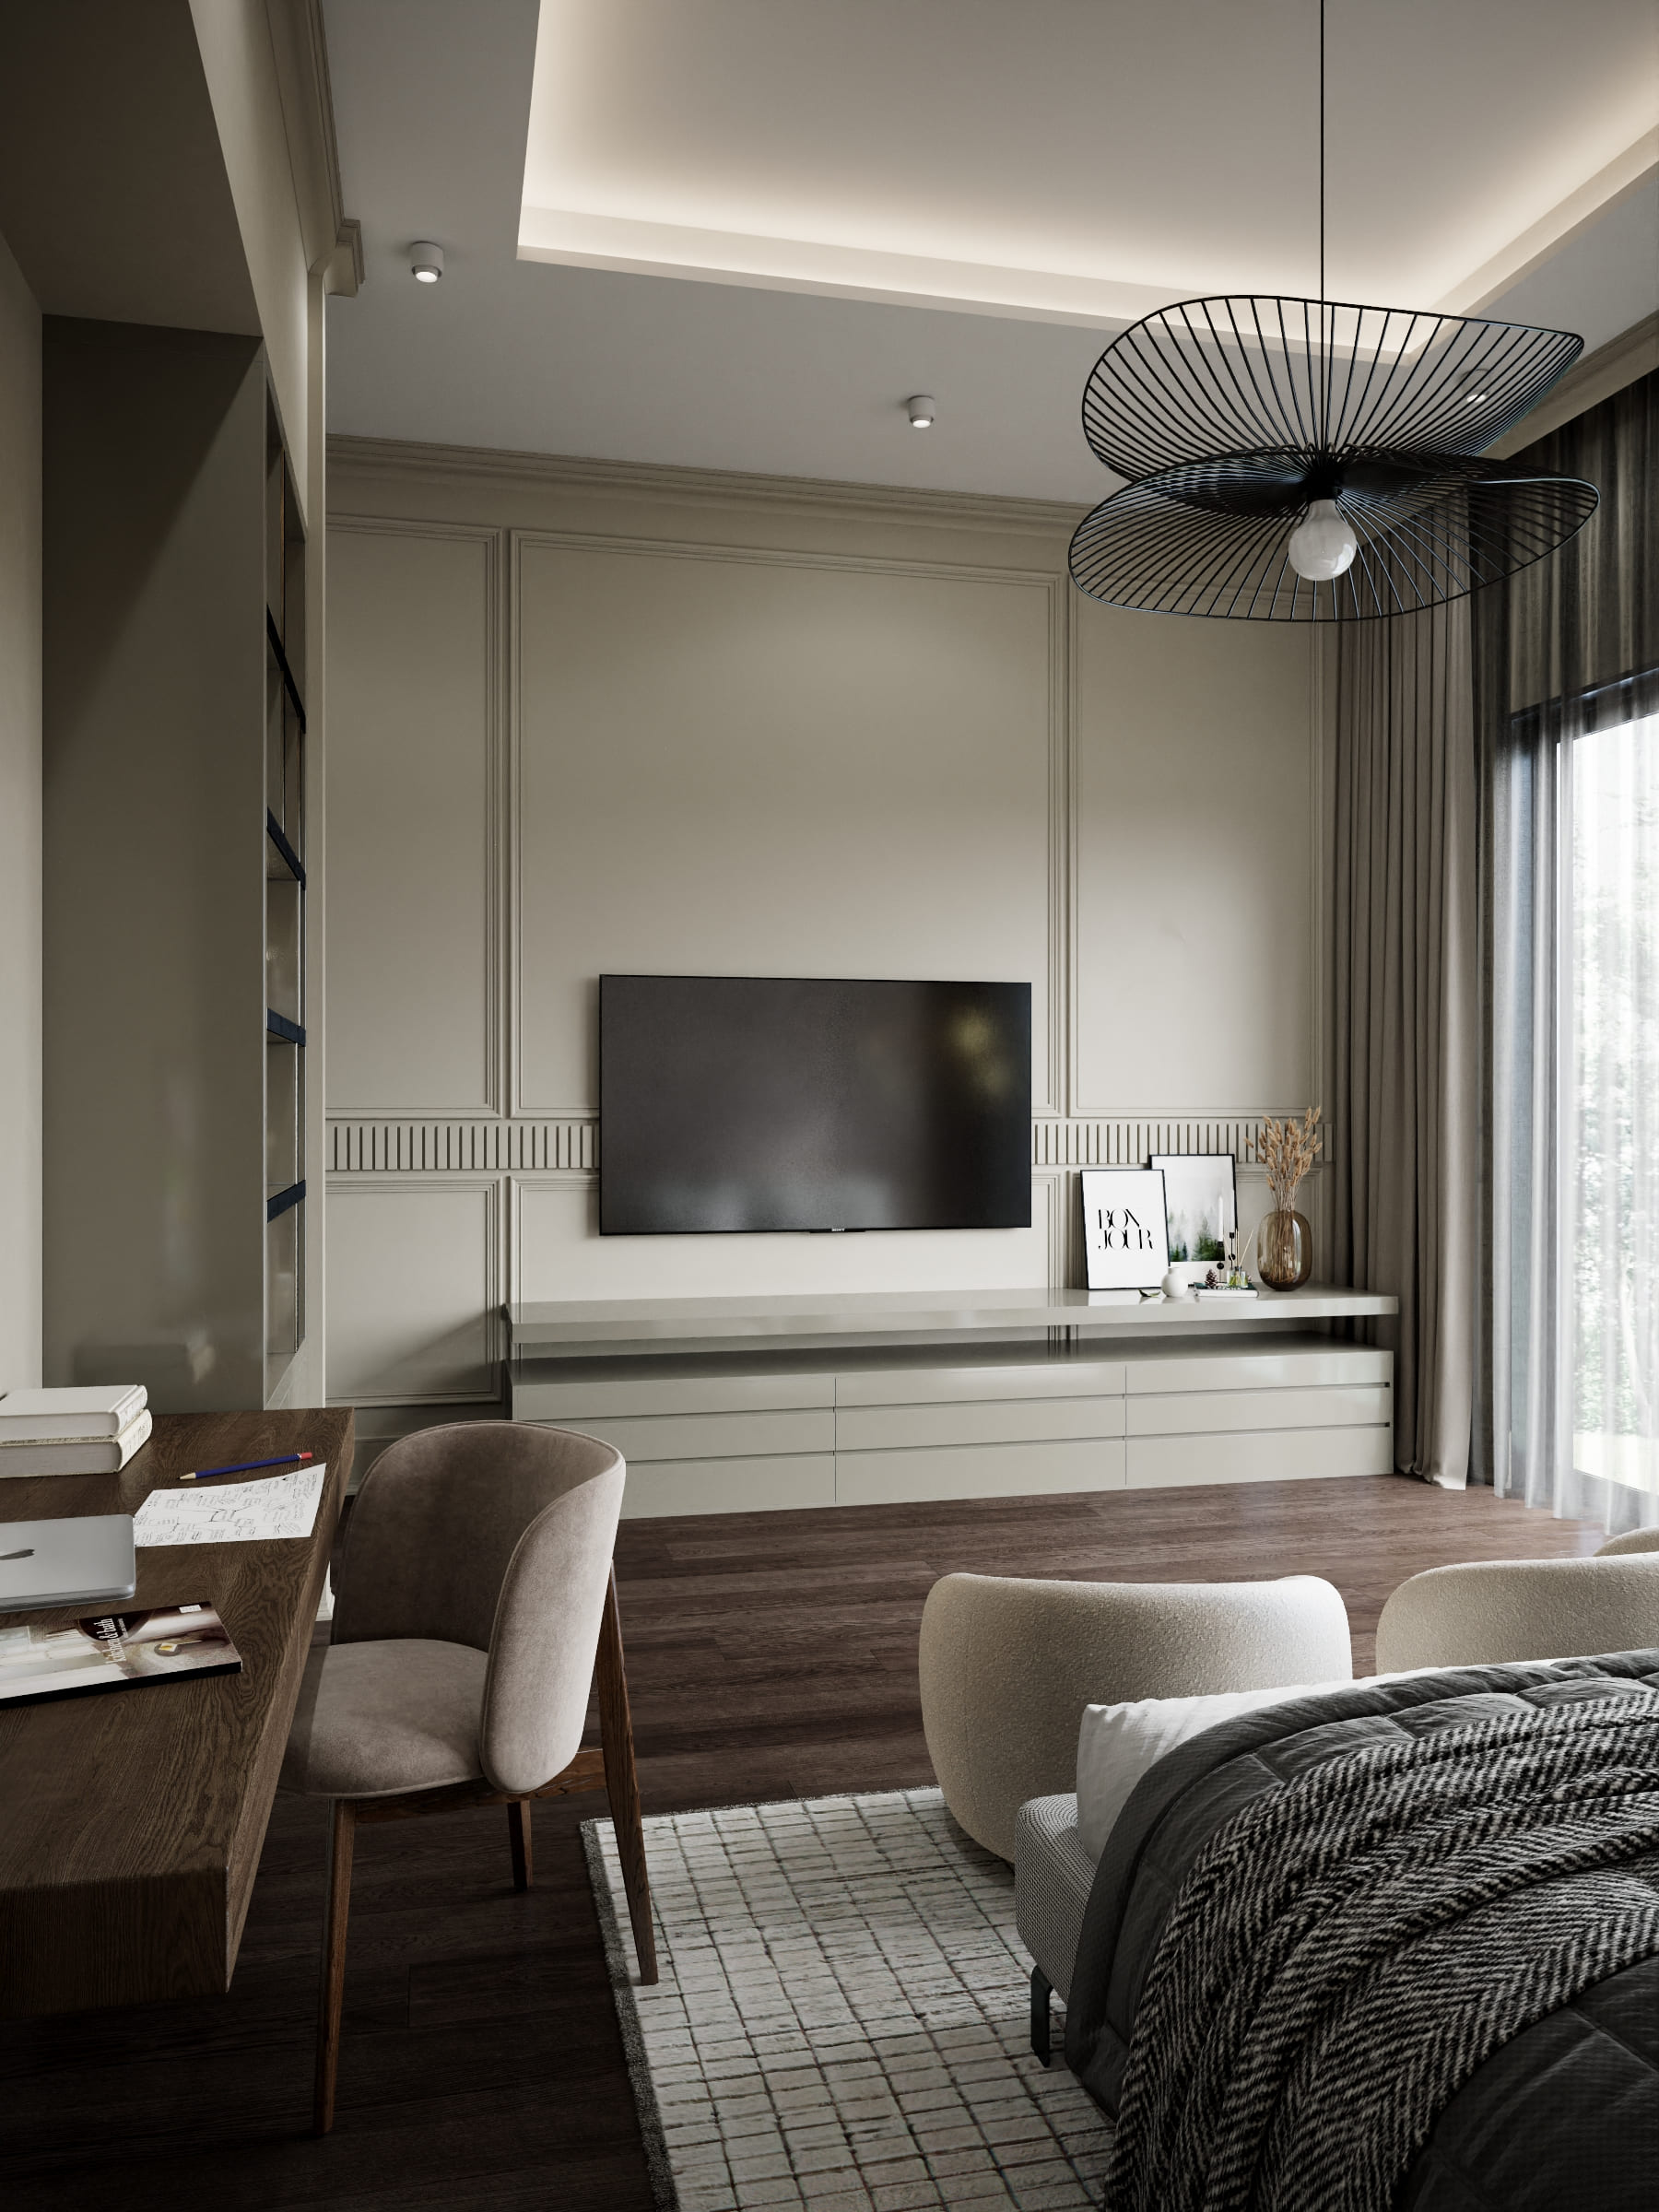 Interior design oth villa jumeirah pearl by kg design guest bedroom